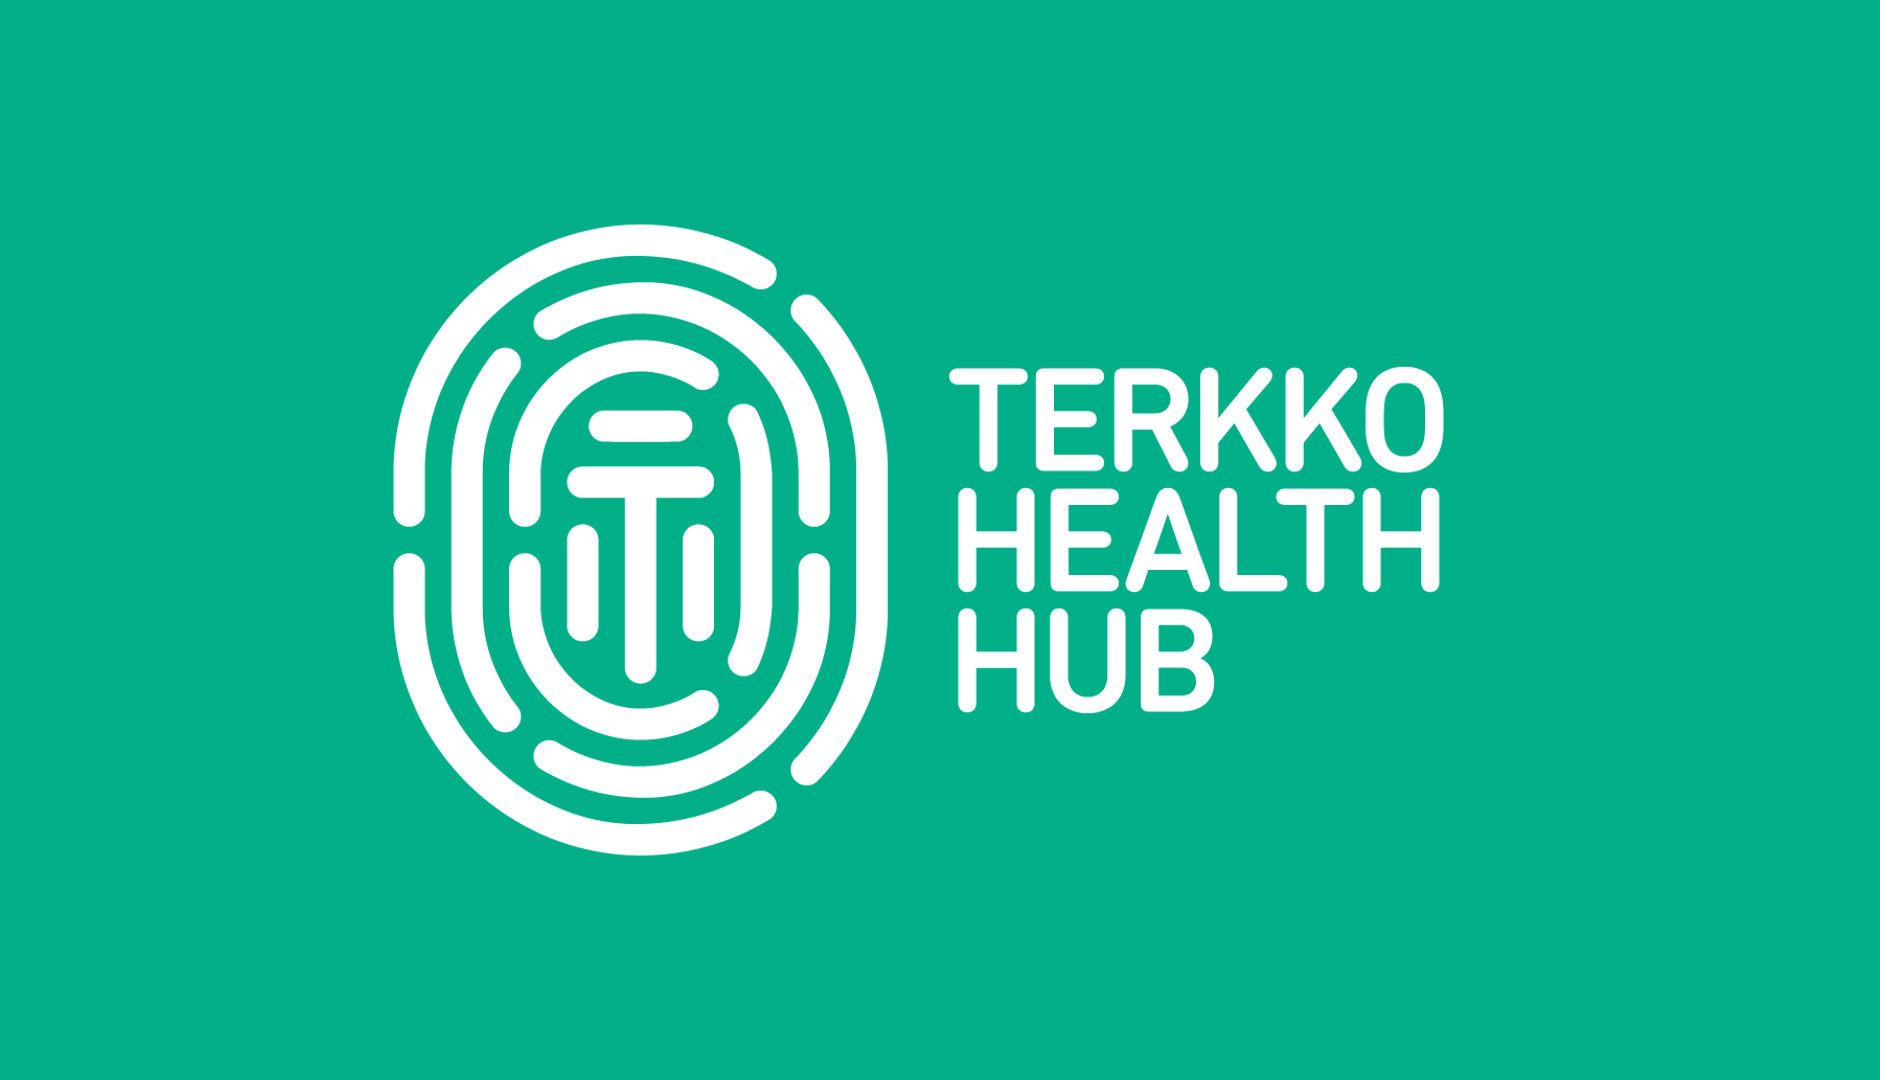 Terkko Health Hub